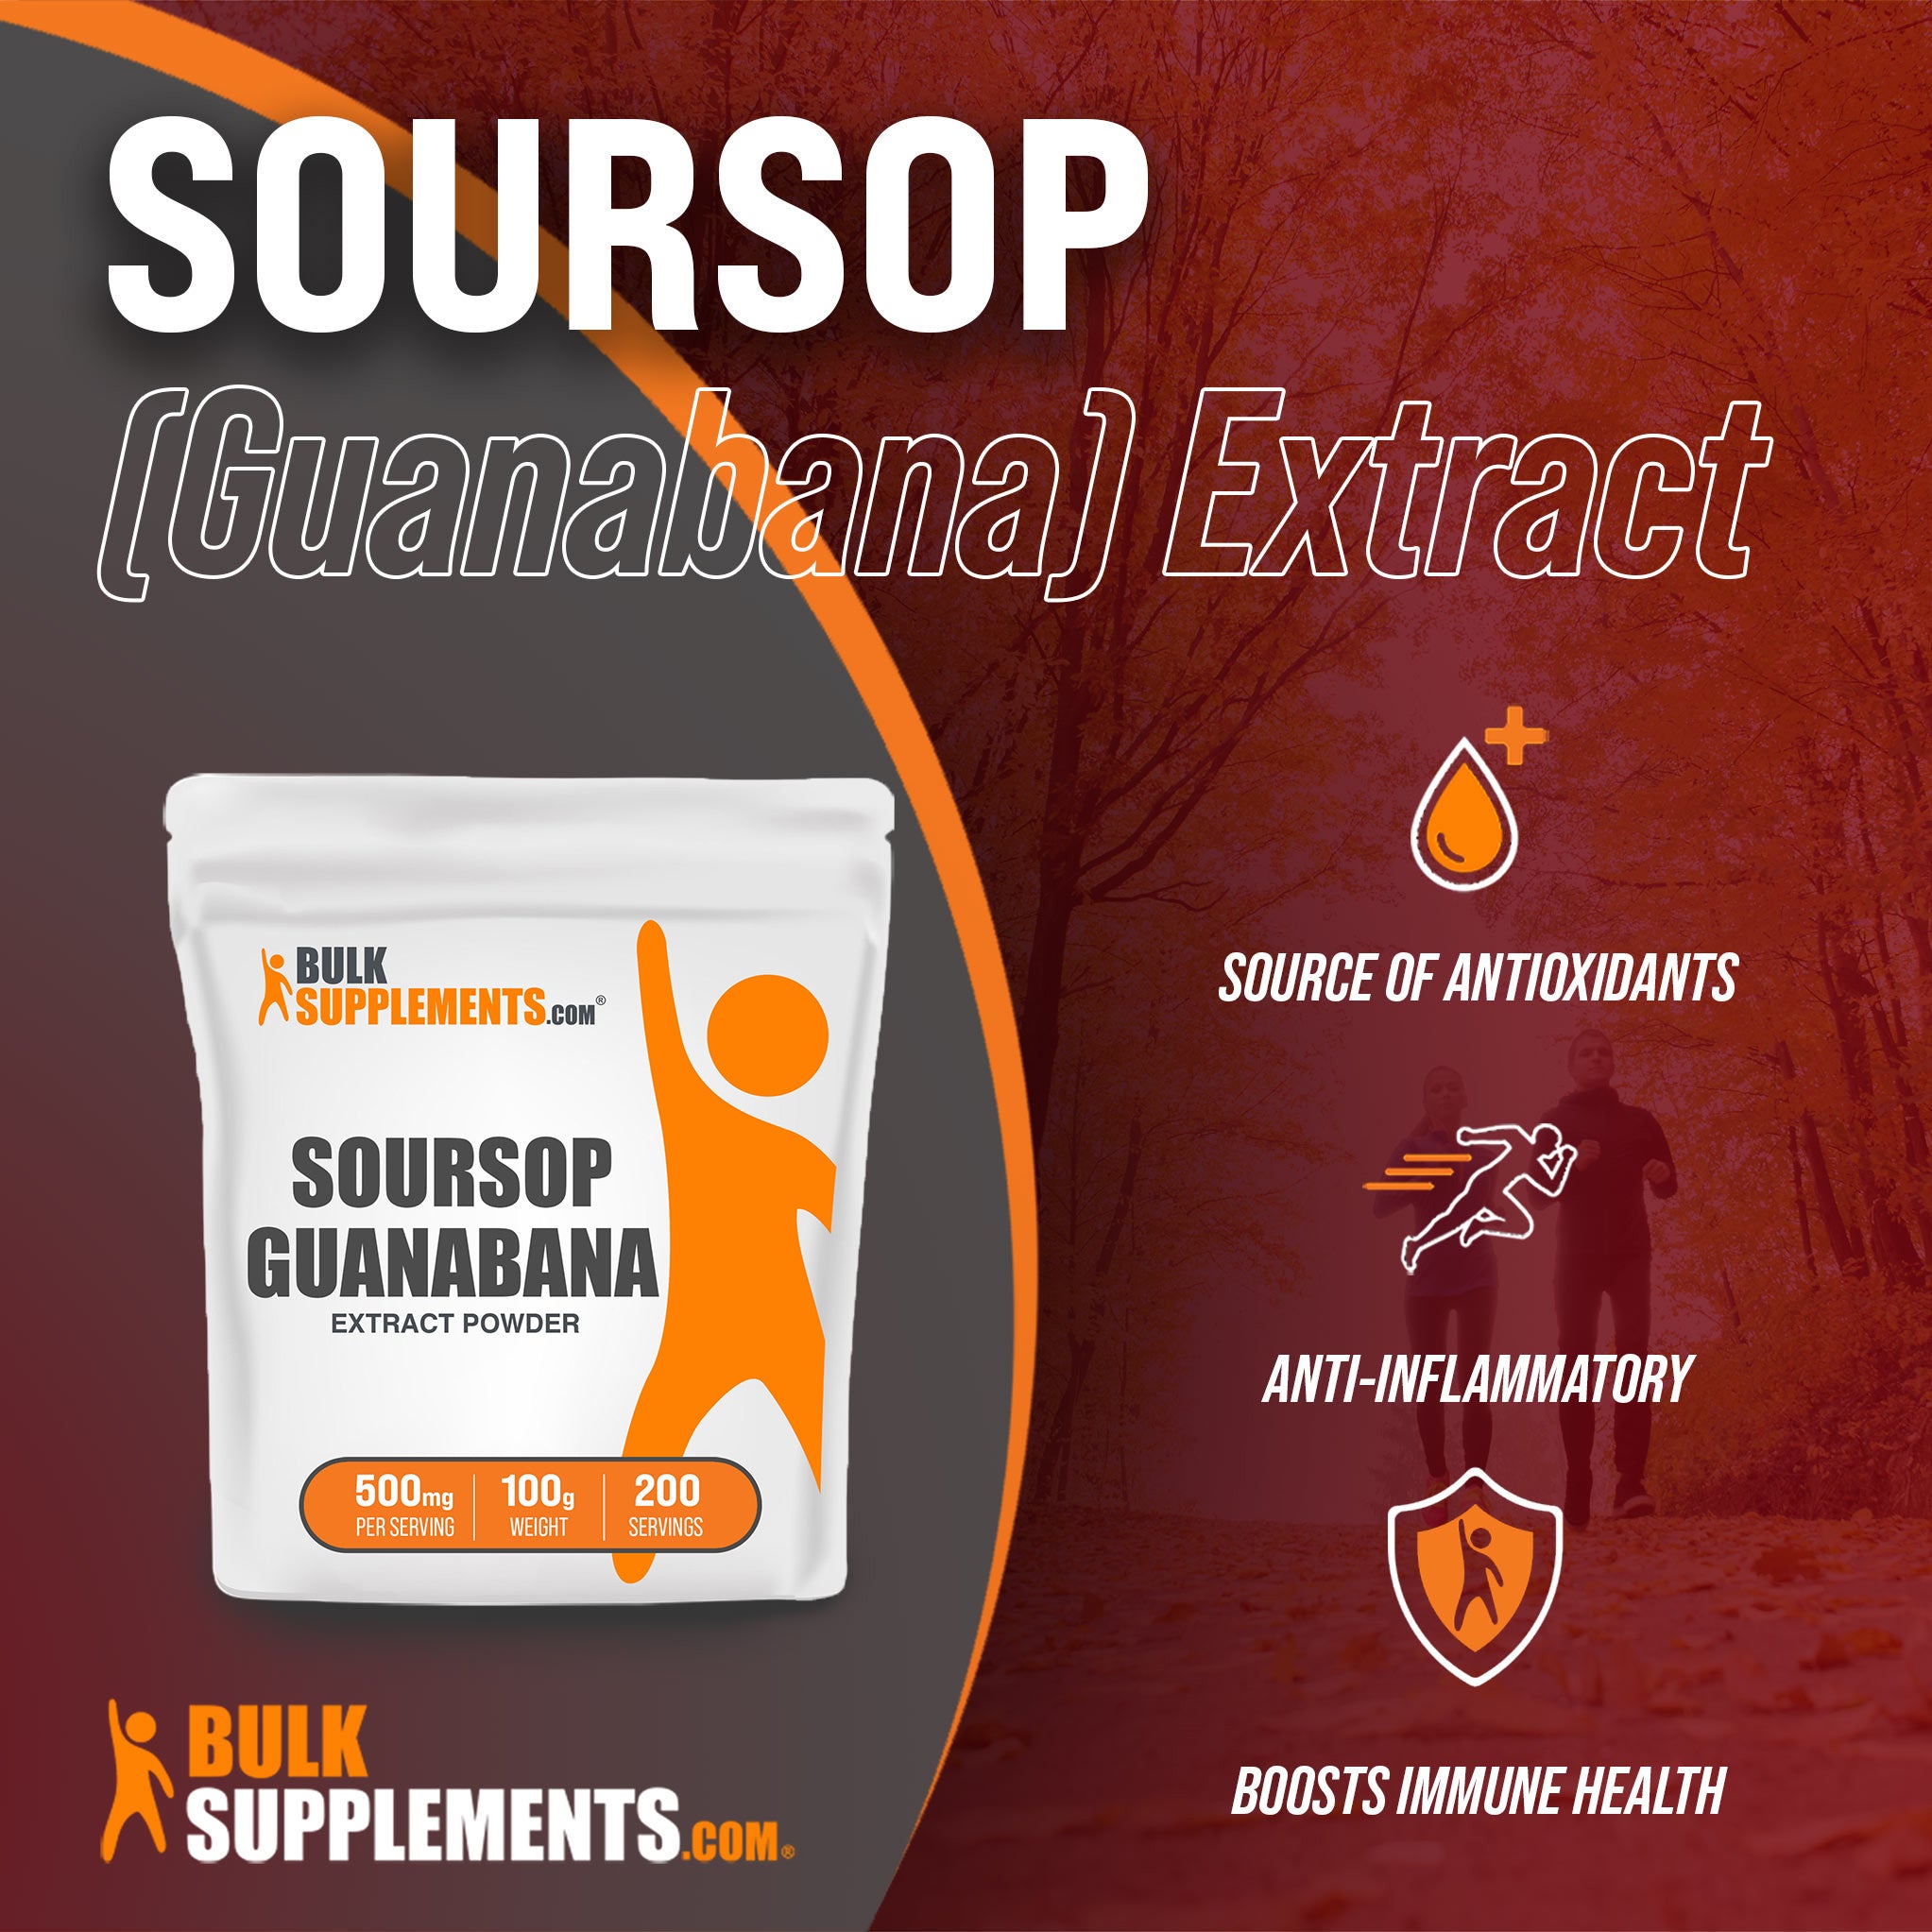 Benefits of Soursop Guanabana Extract: source of antioxidants, anti-inflammatory, boosts immune health